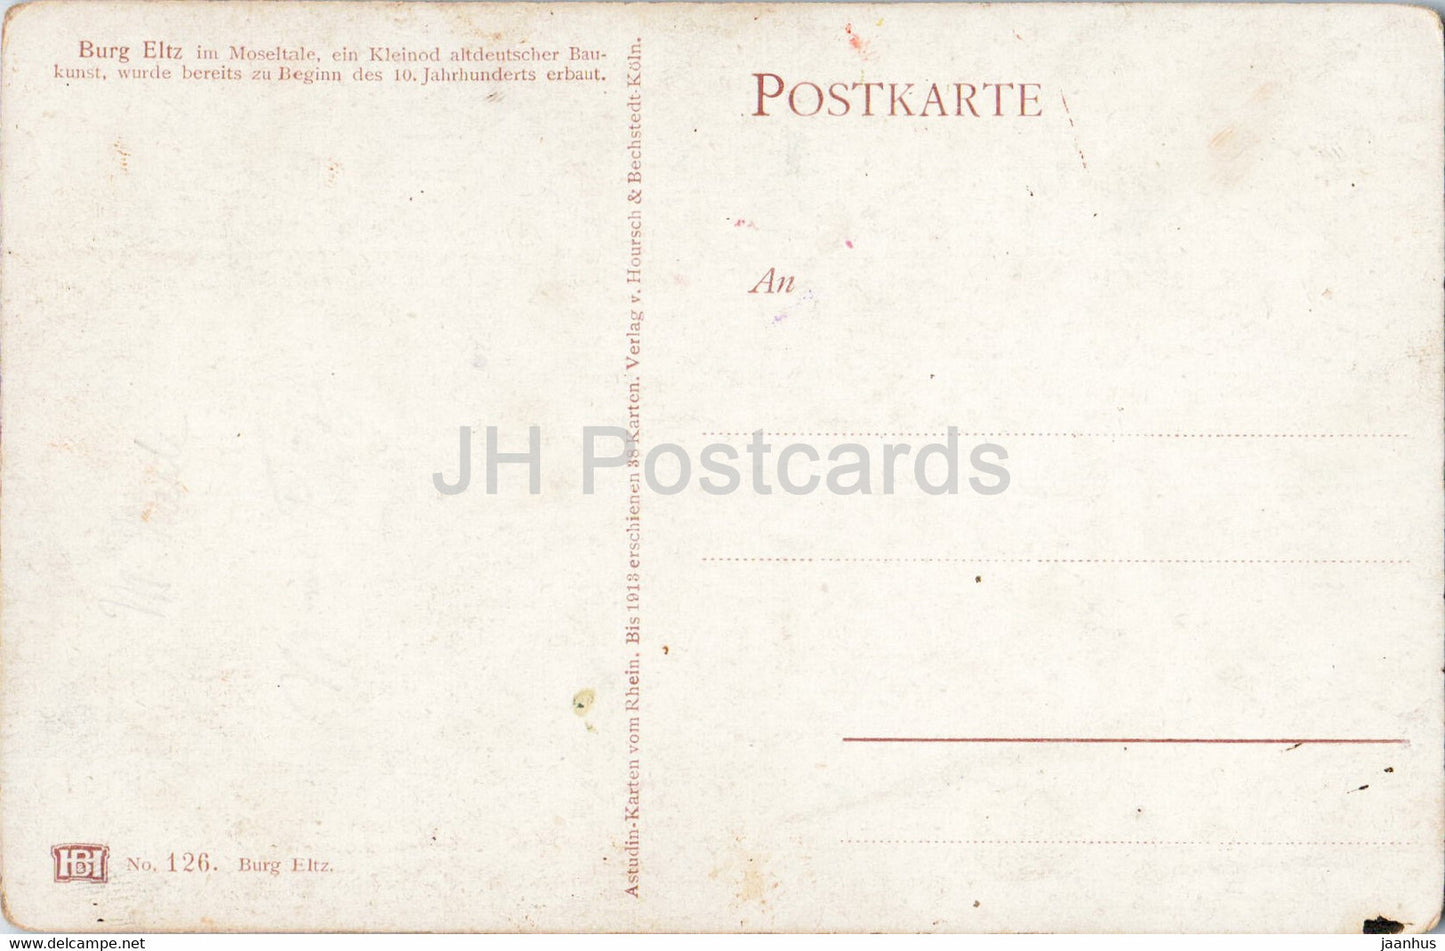 Burg Eltz im Moseltale - illustration - 126 - carte postale ancienne - Allemagne - inutilisé